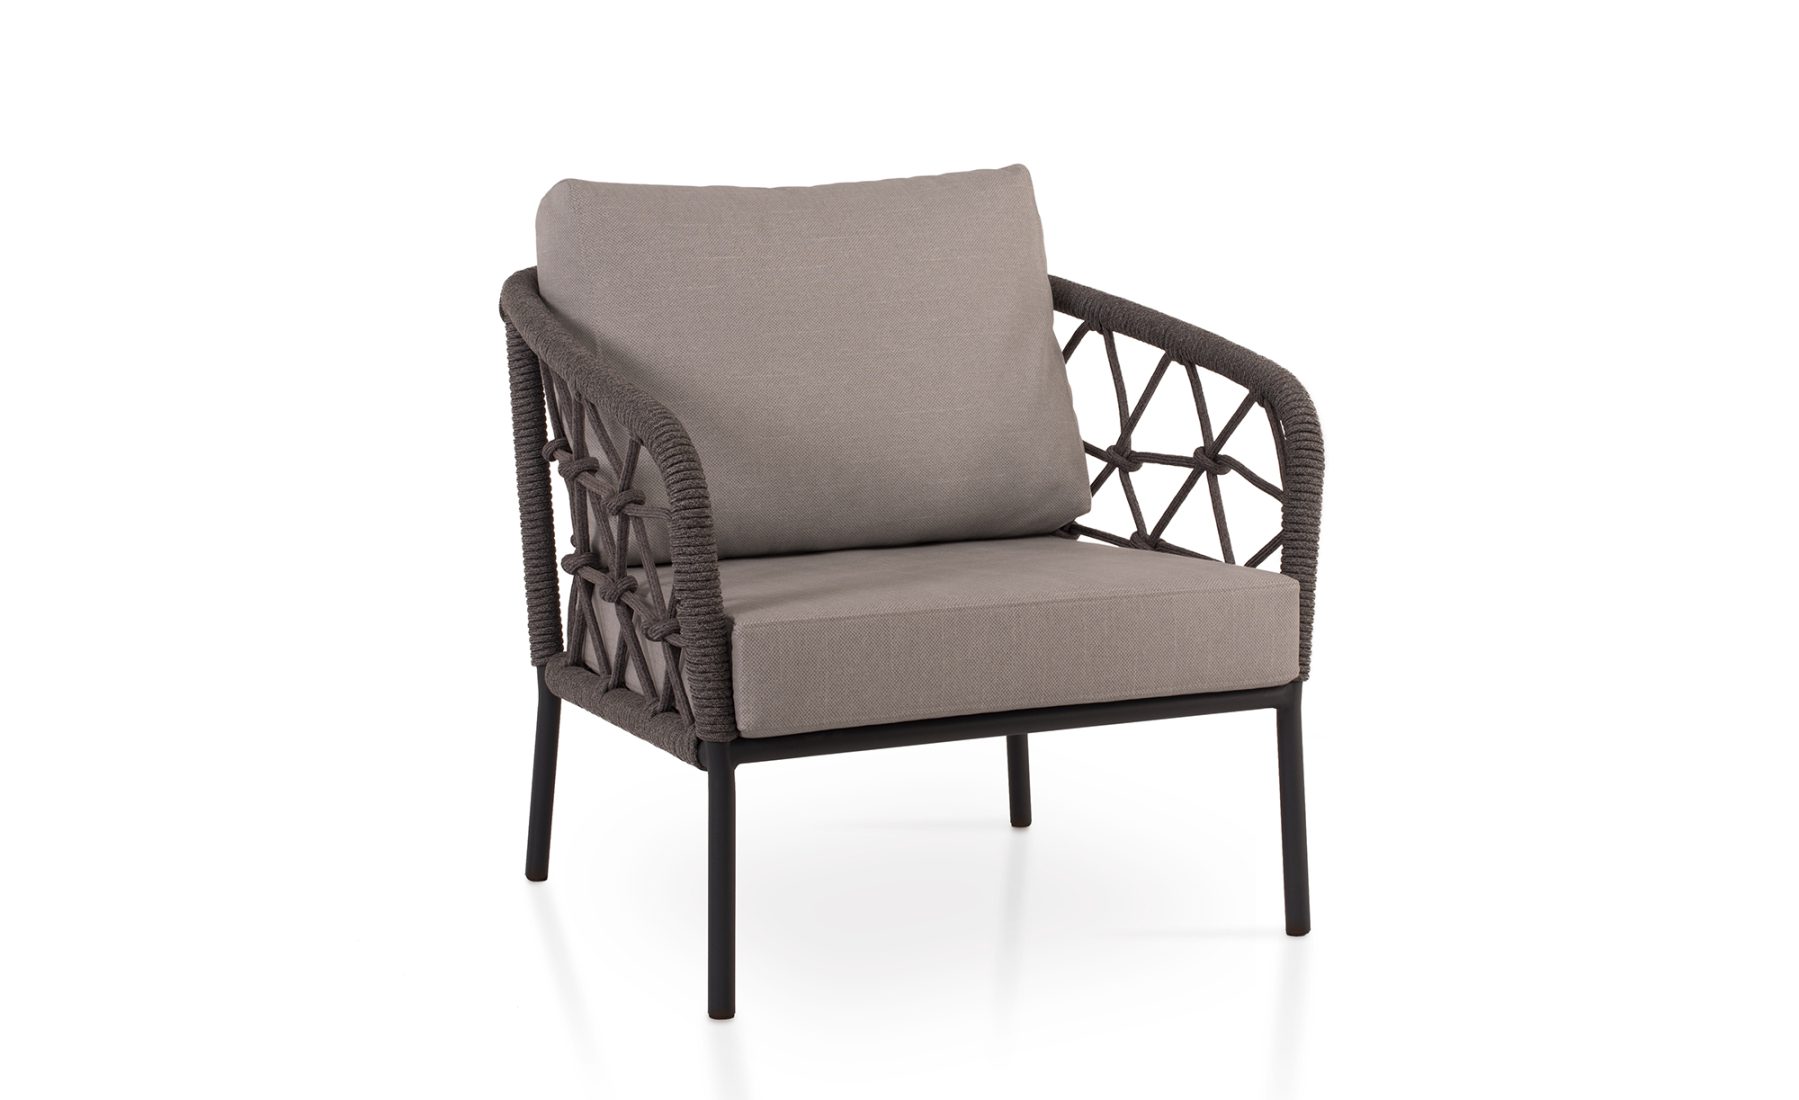 2.-Roma-Lounge-Chair